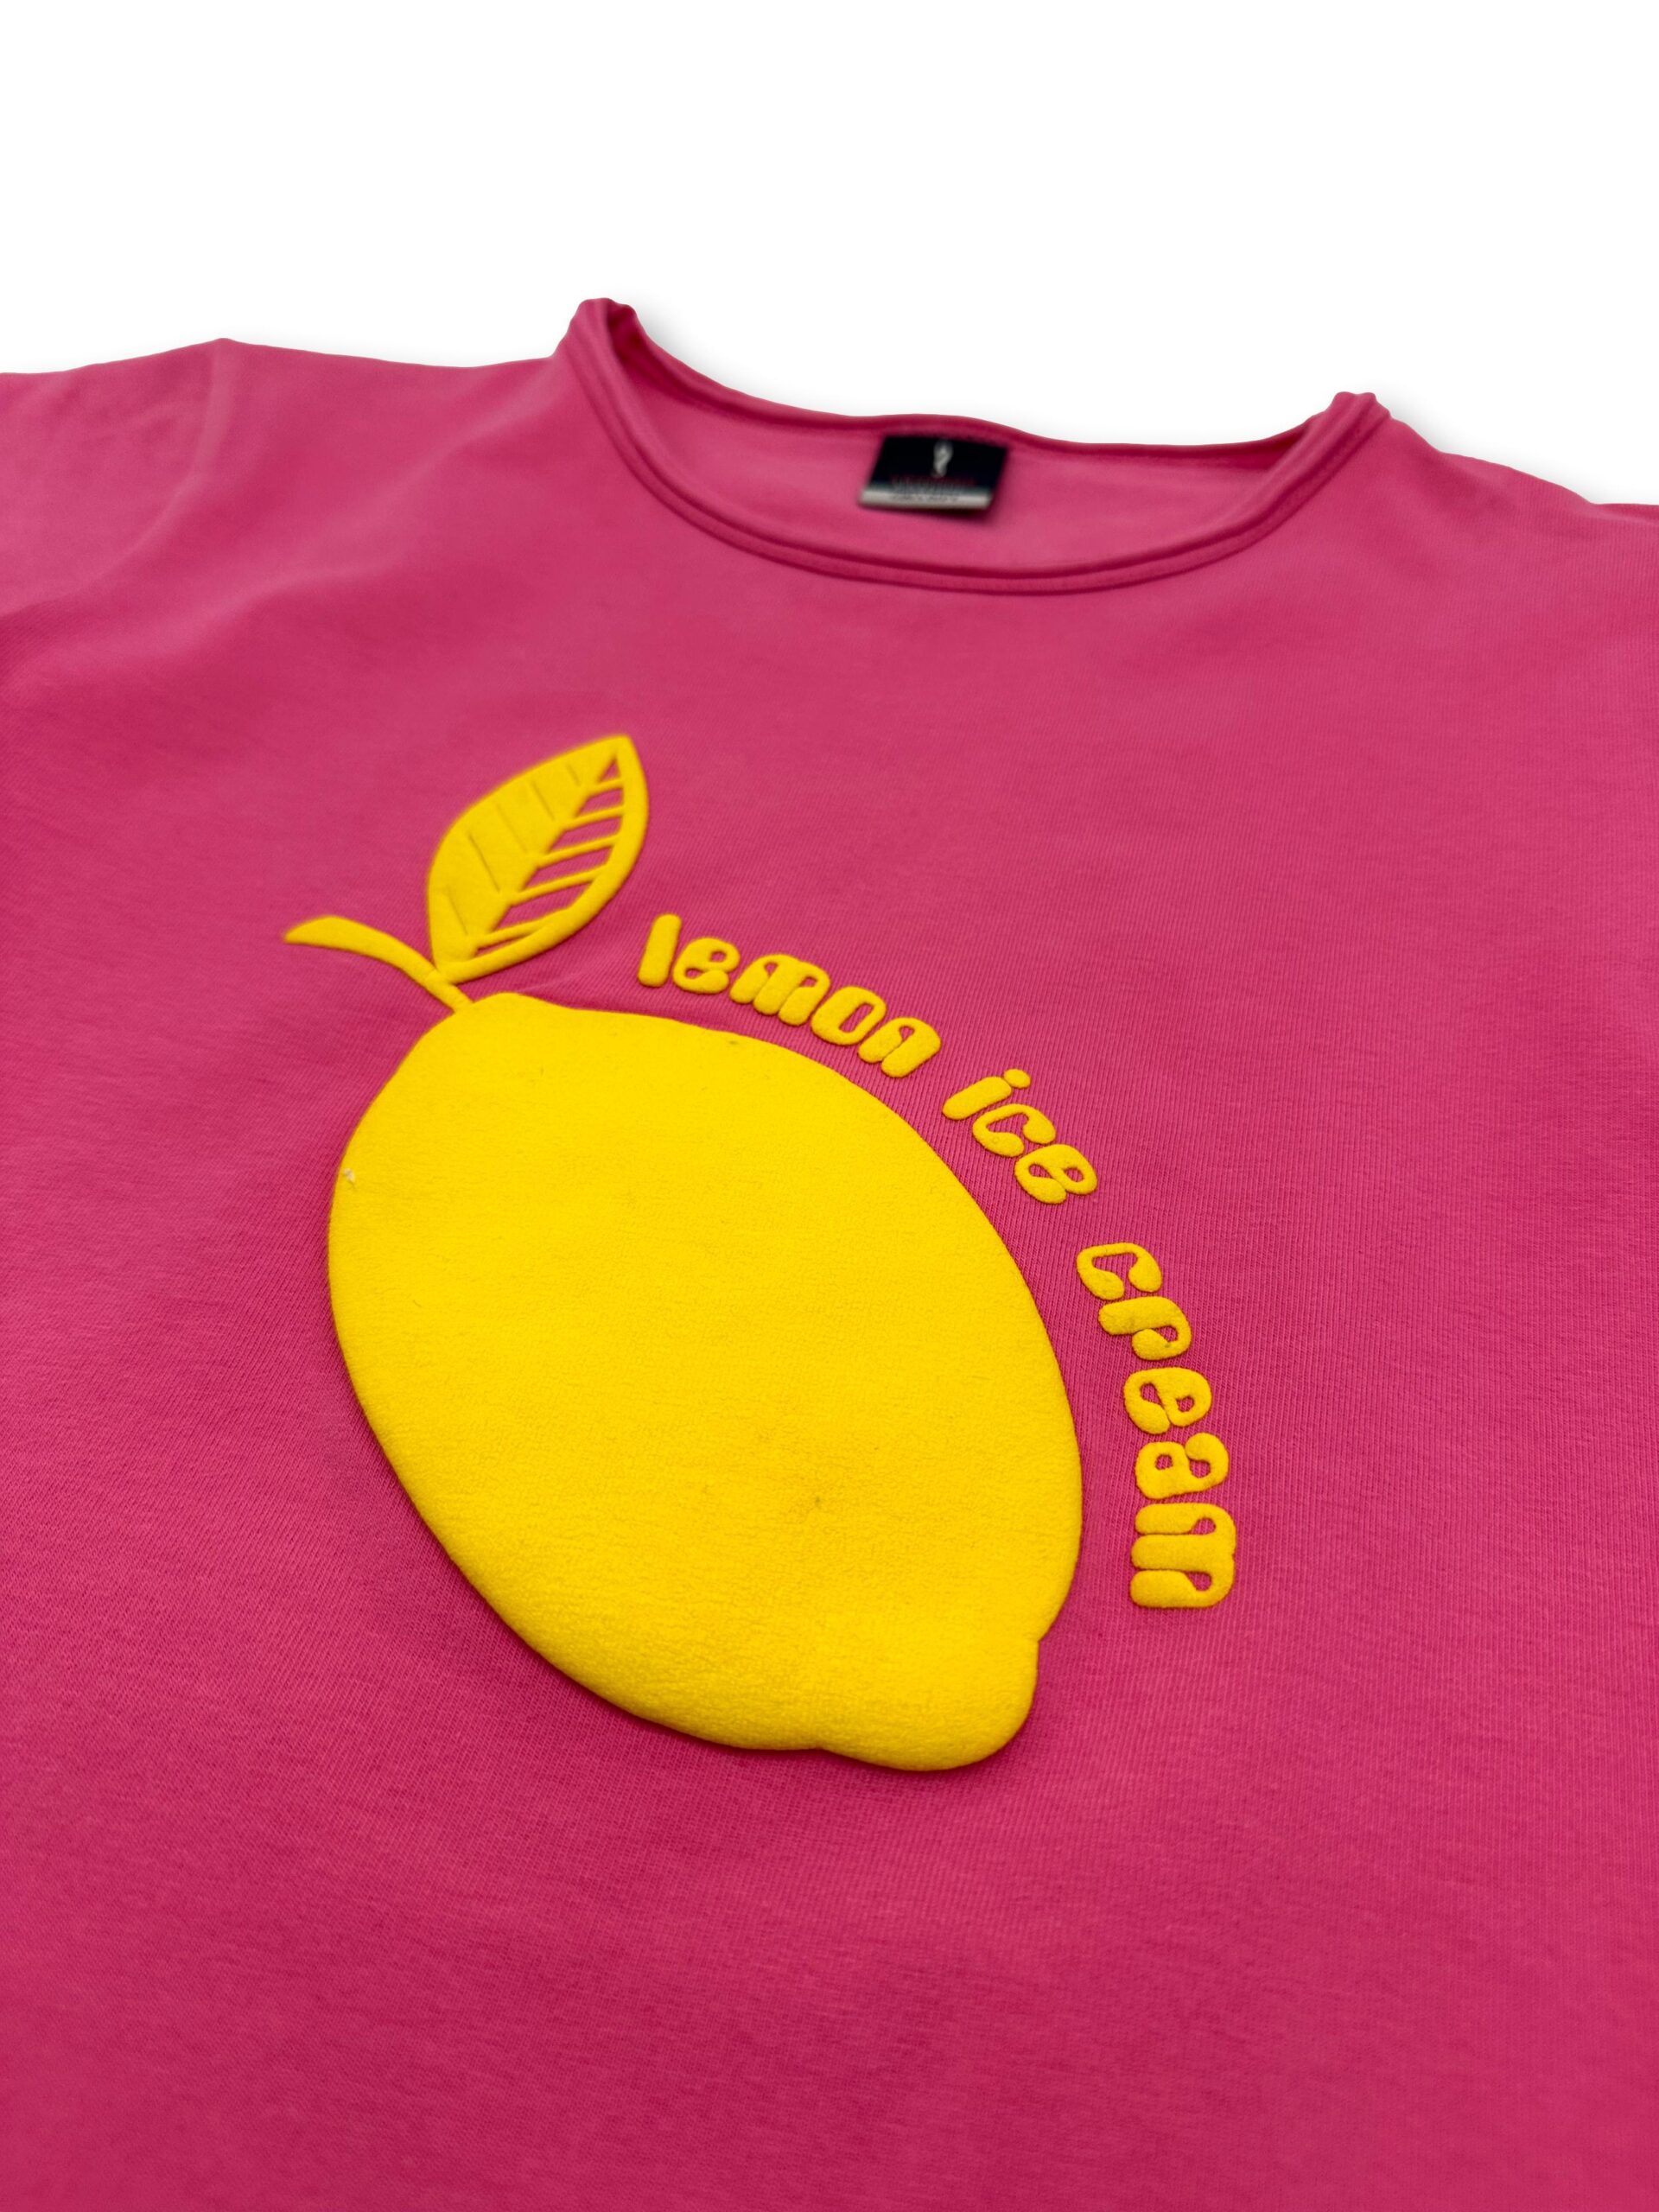 T-shirt Rosa 10-11 Anos – LANIDOR